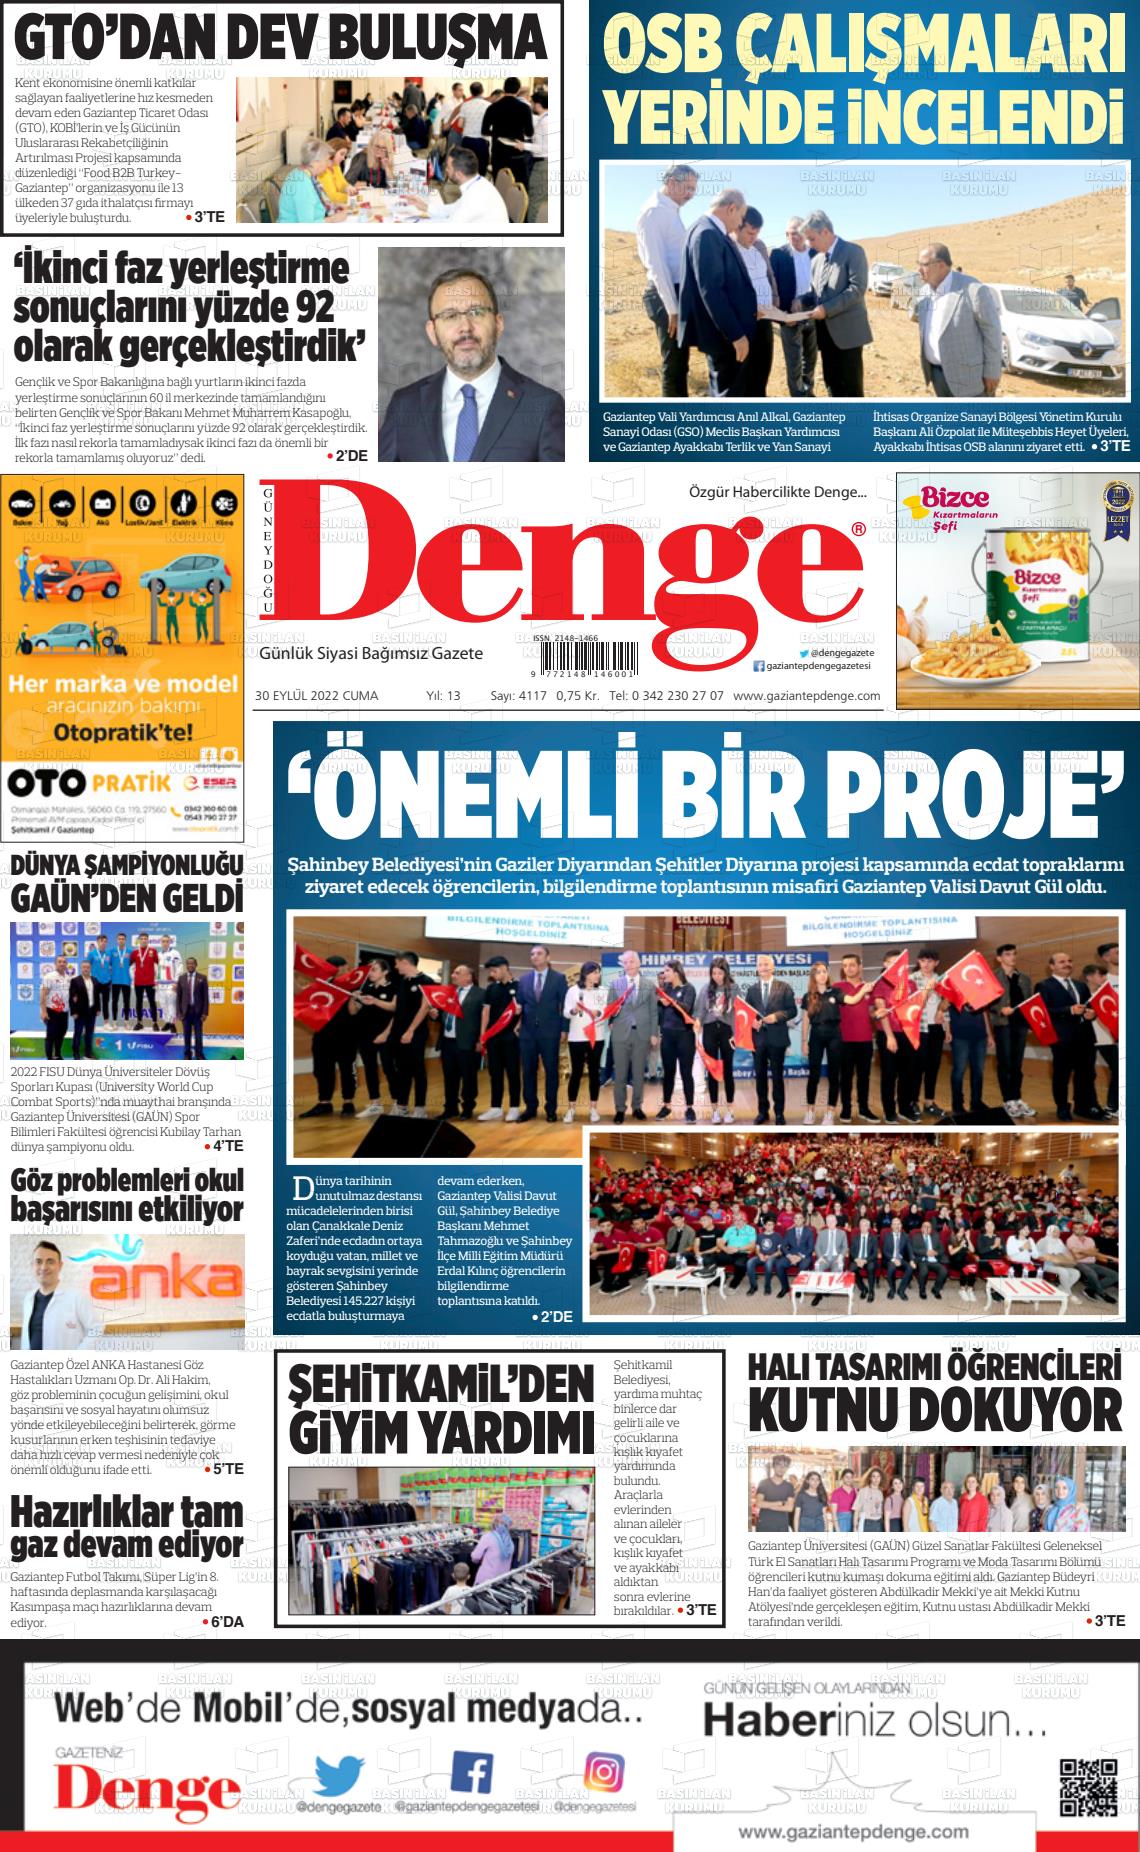 30 Eylül 2022 Gaziantep Denge Gazete Manşeti